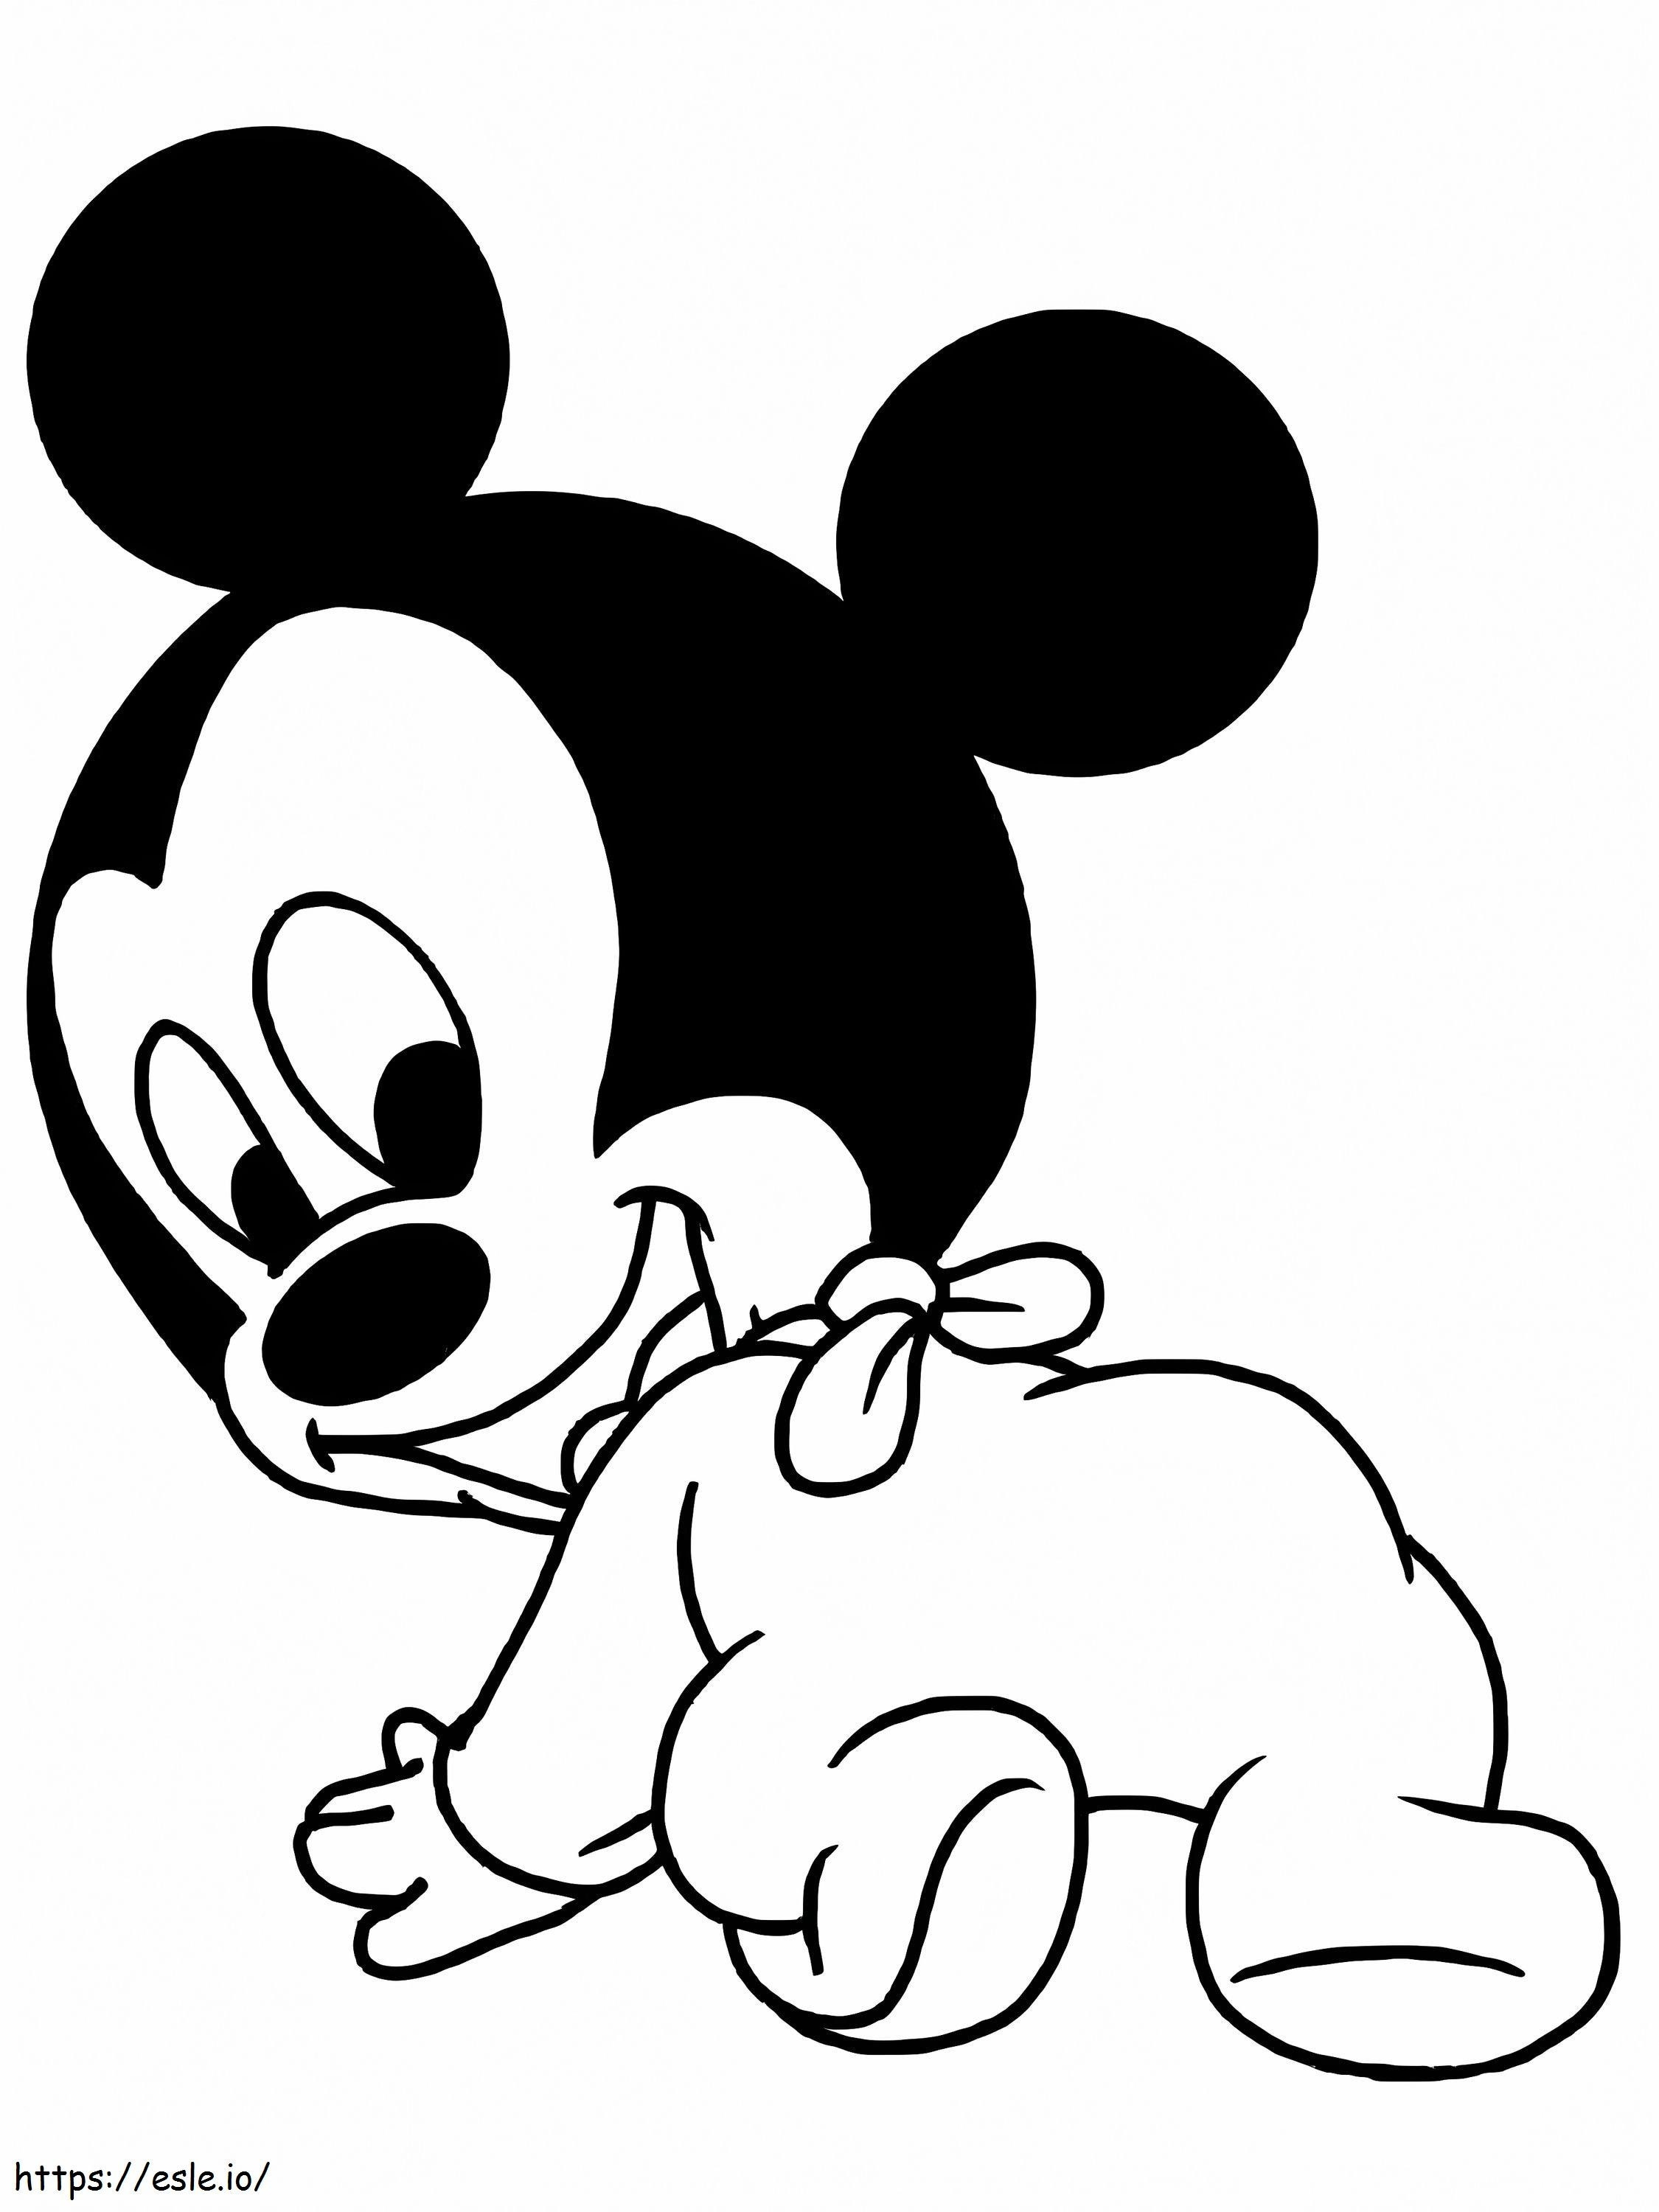 Coloriage Bébés Disney Mickey à imprimer dessin